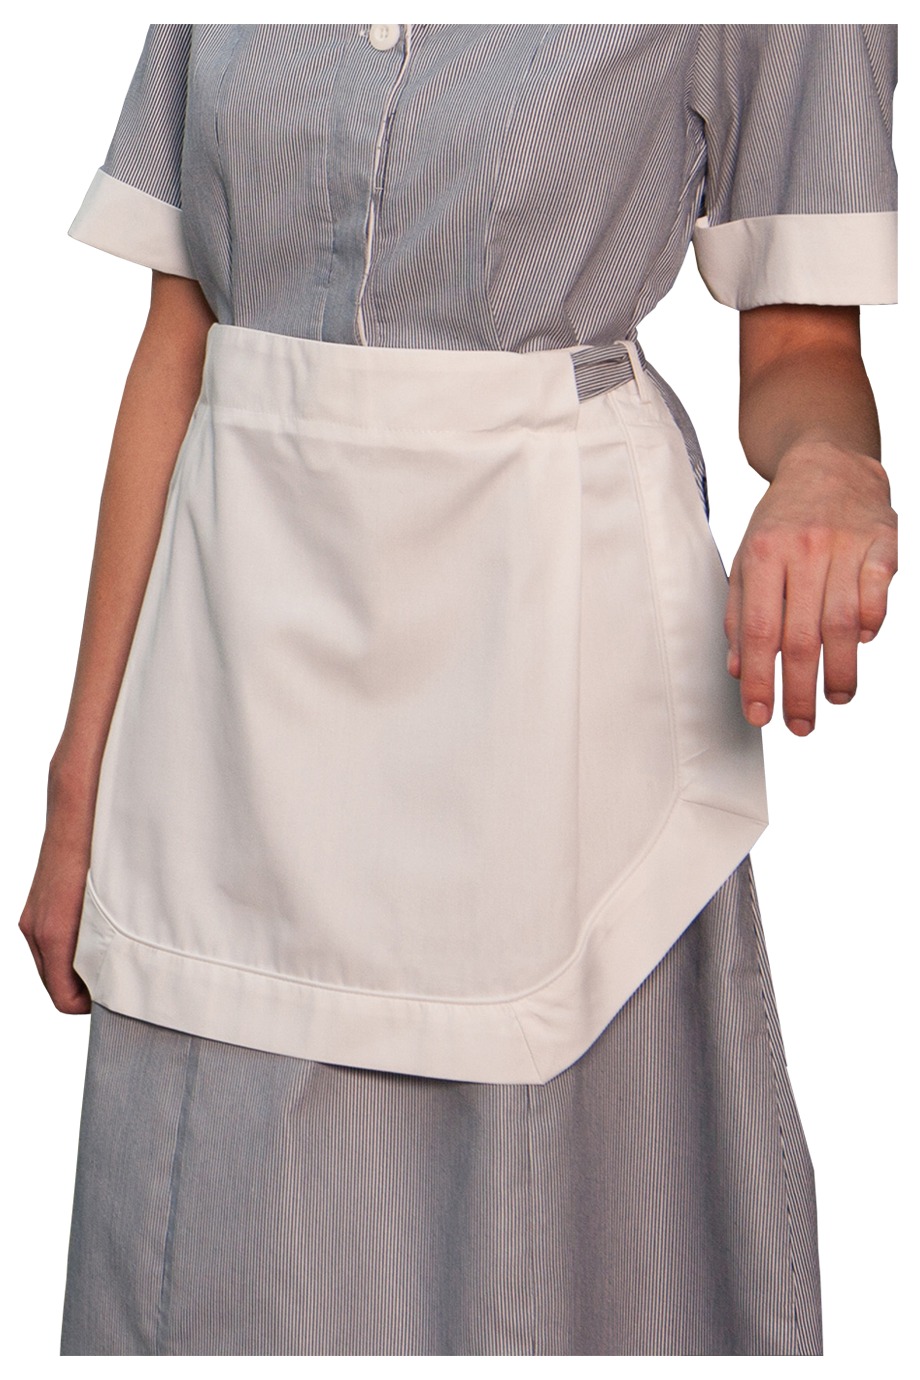 Edwards Garment 9045 - Tea Apron For Housekeeping Dress